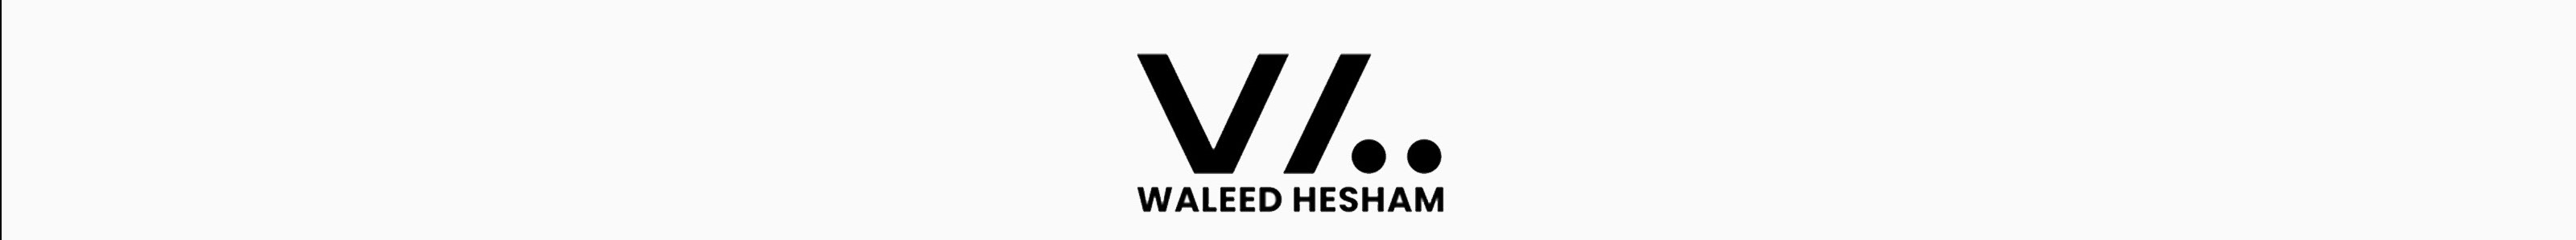 Profielbanner van Waleed Hesham